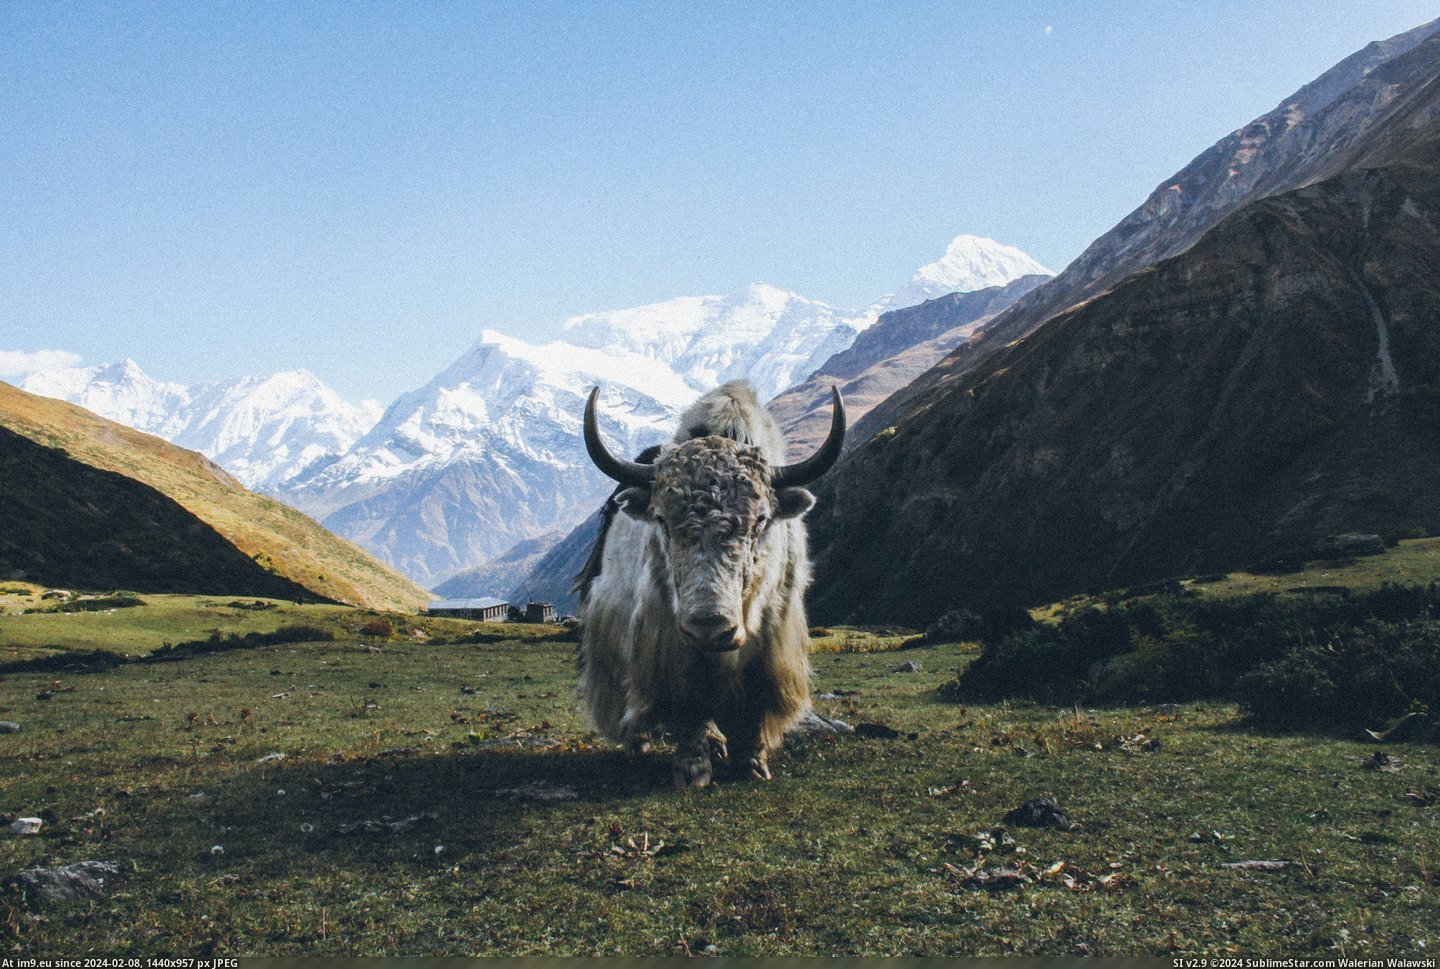  #Nepal  [Pics] A Yak in Nepal. Pic. (Изображение из альбом My r/PICS favs))